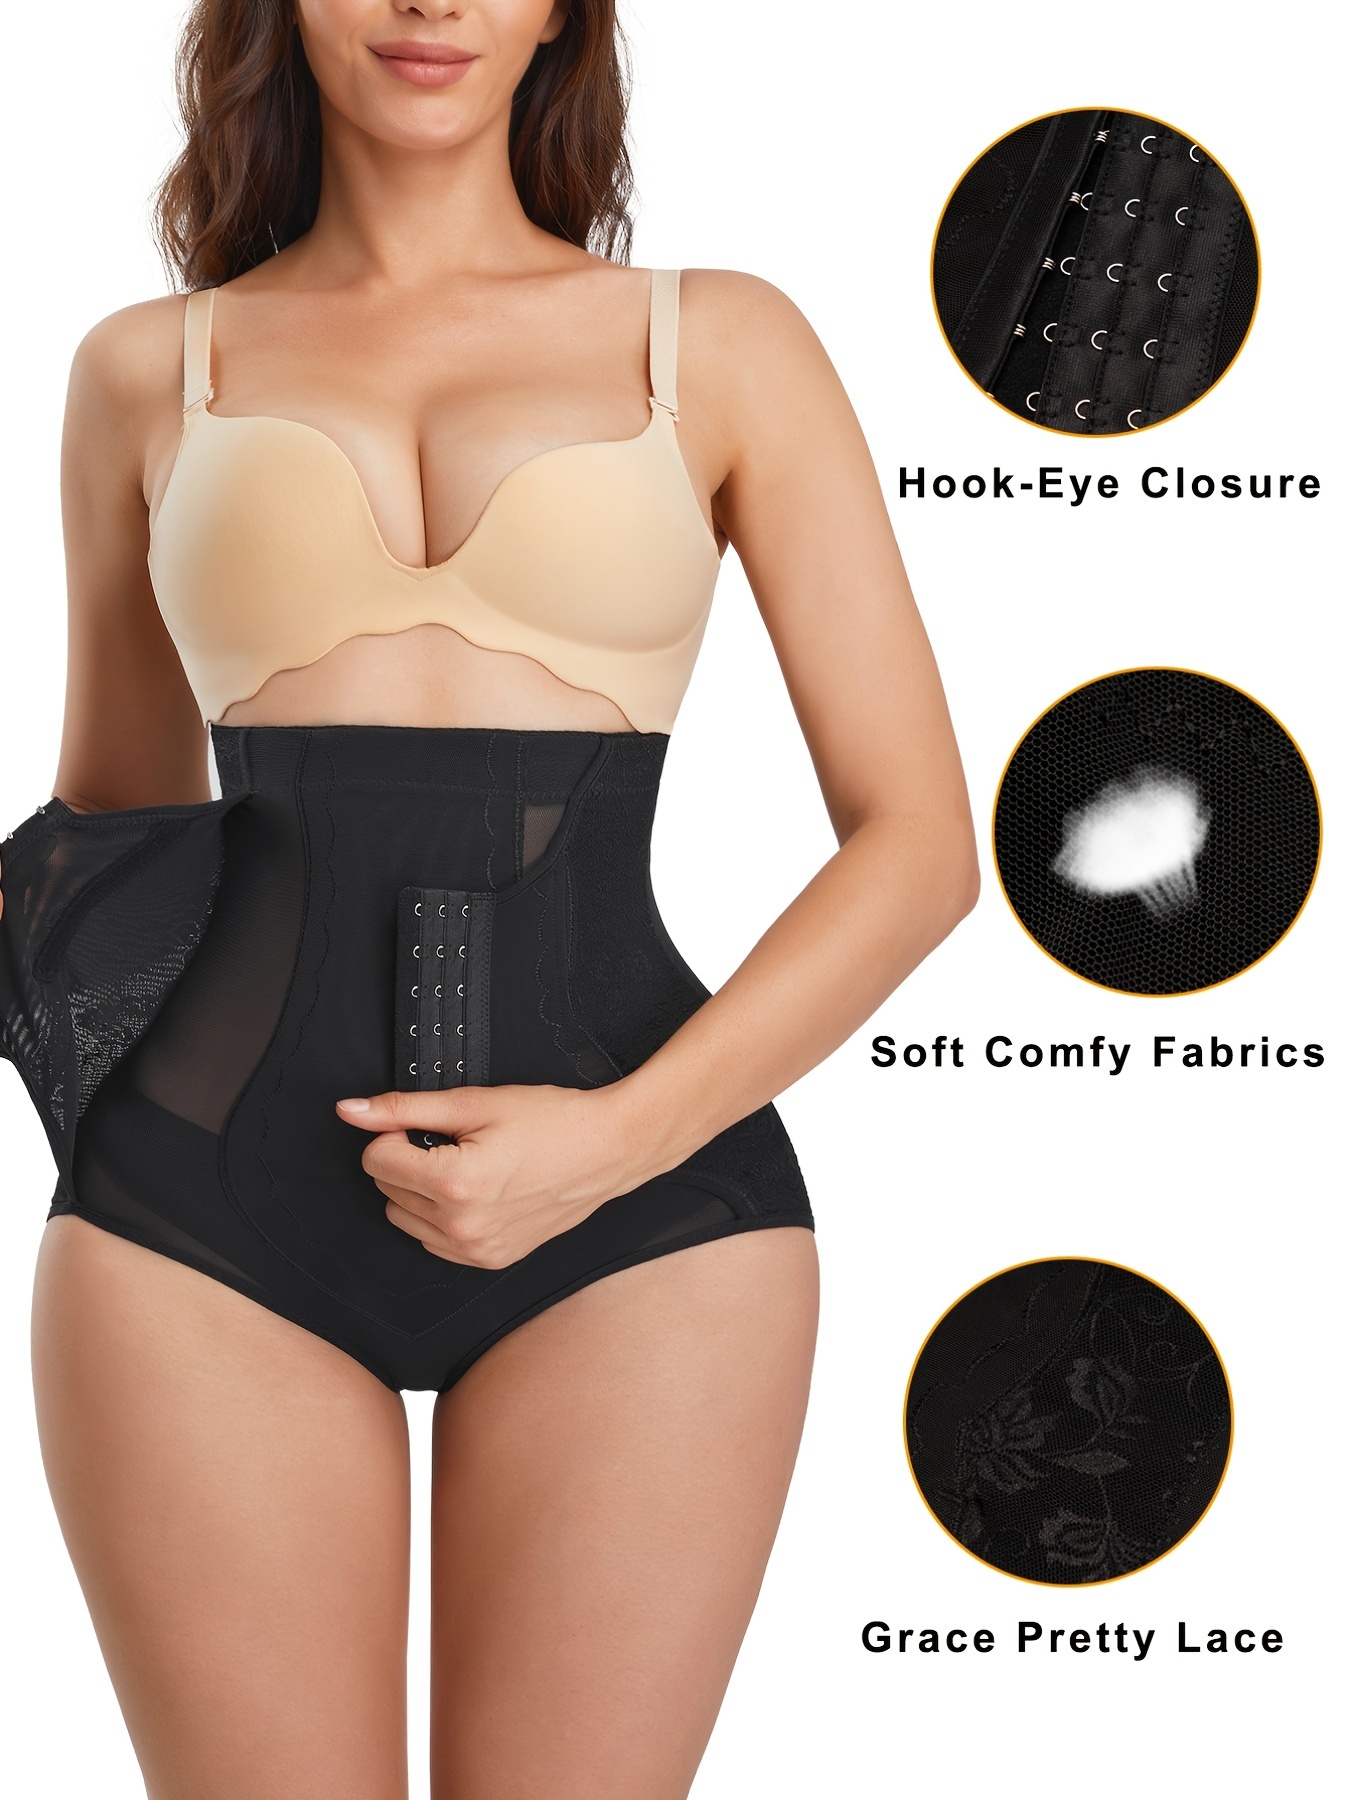 Cheap Flarixa Plus Size Full Body Shapers Women Seamless Bodysuit Tummy Control  Shapewear Postpartum Butt Lift Slimming Underwear XXXL